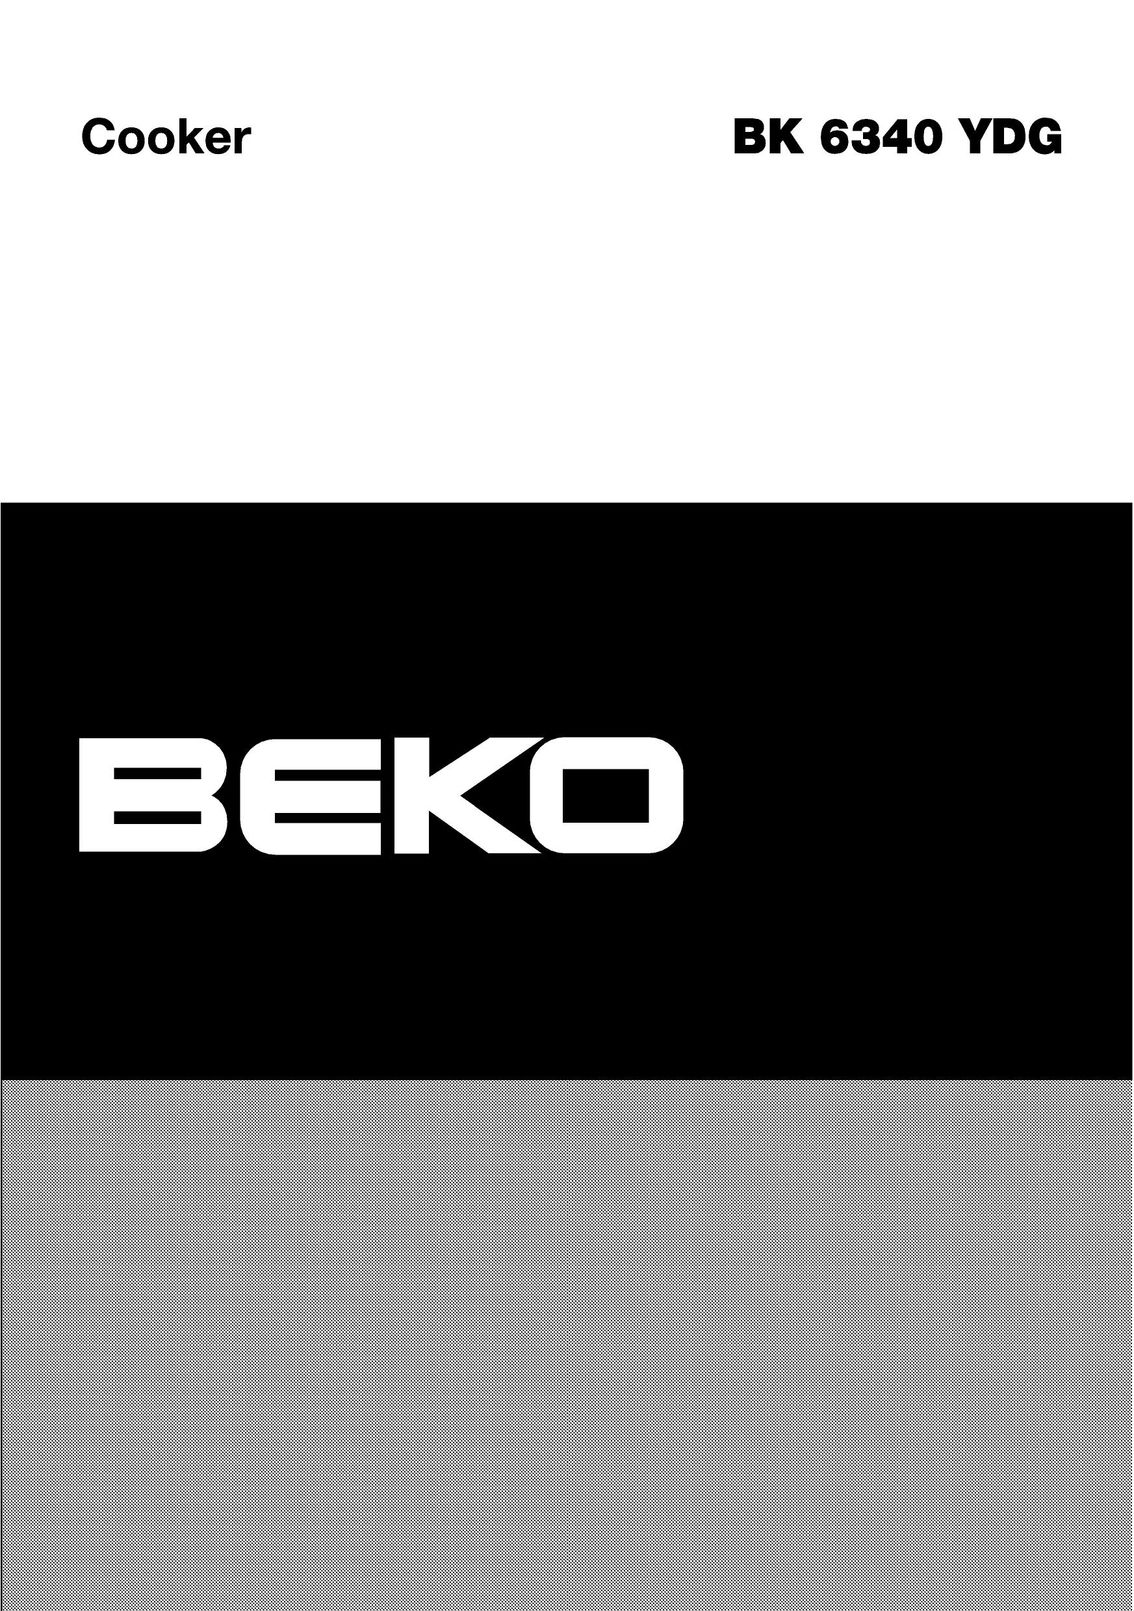 Beko BK 6340 YDG Cooktop User Manual